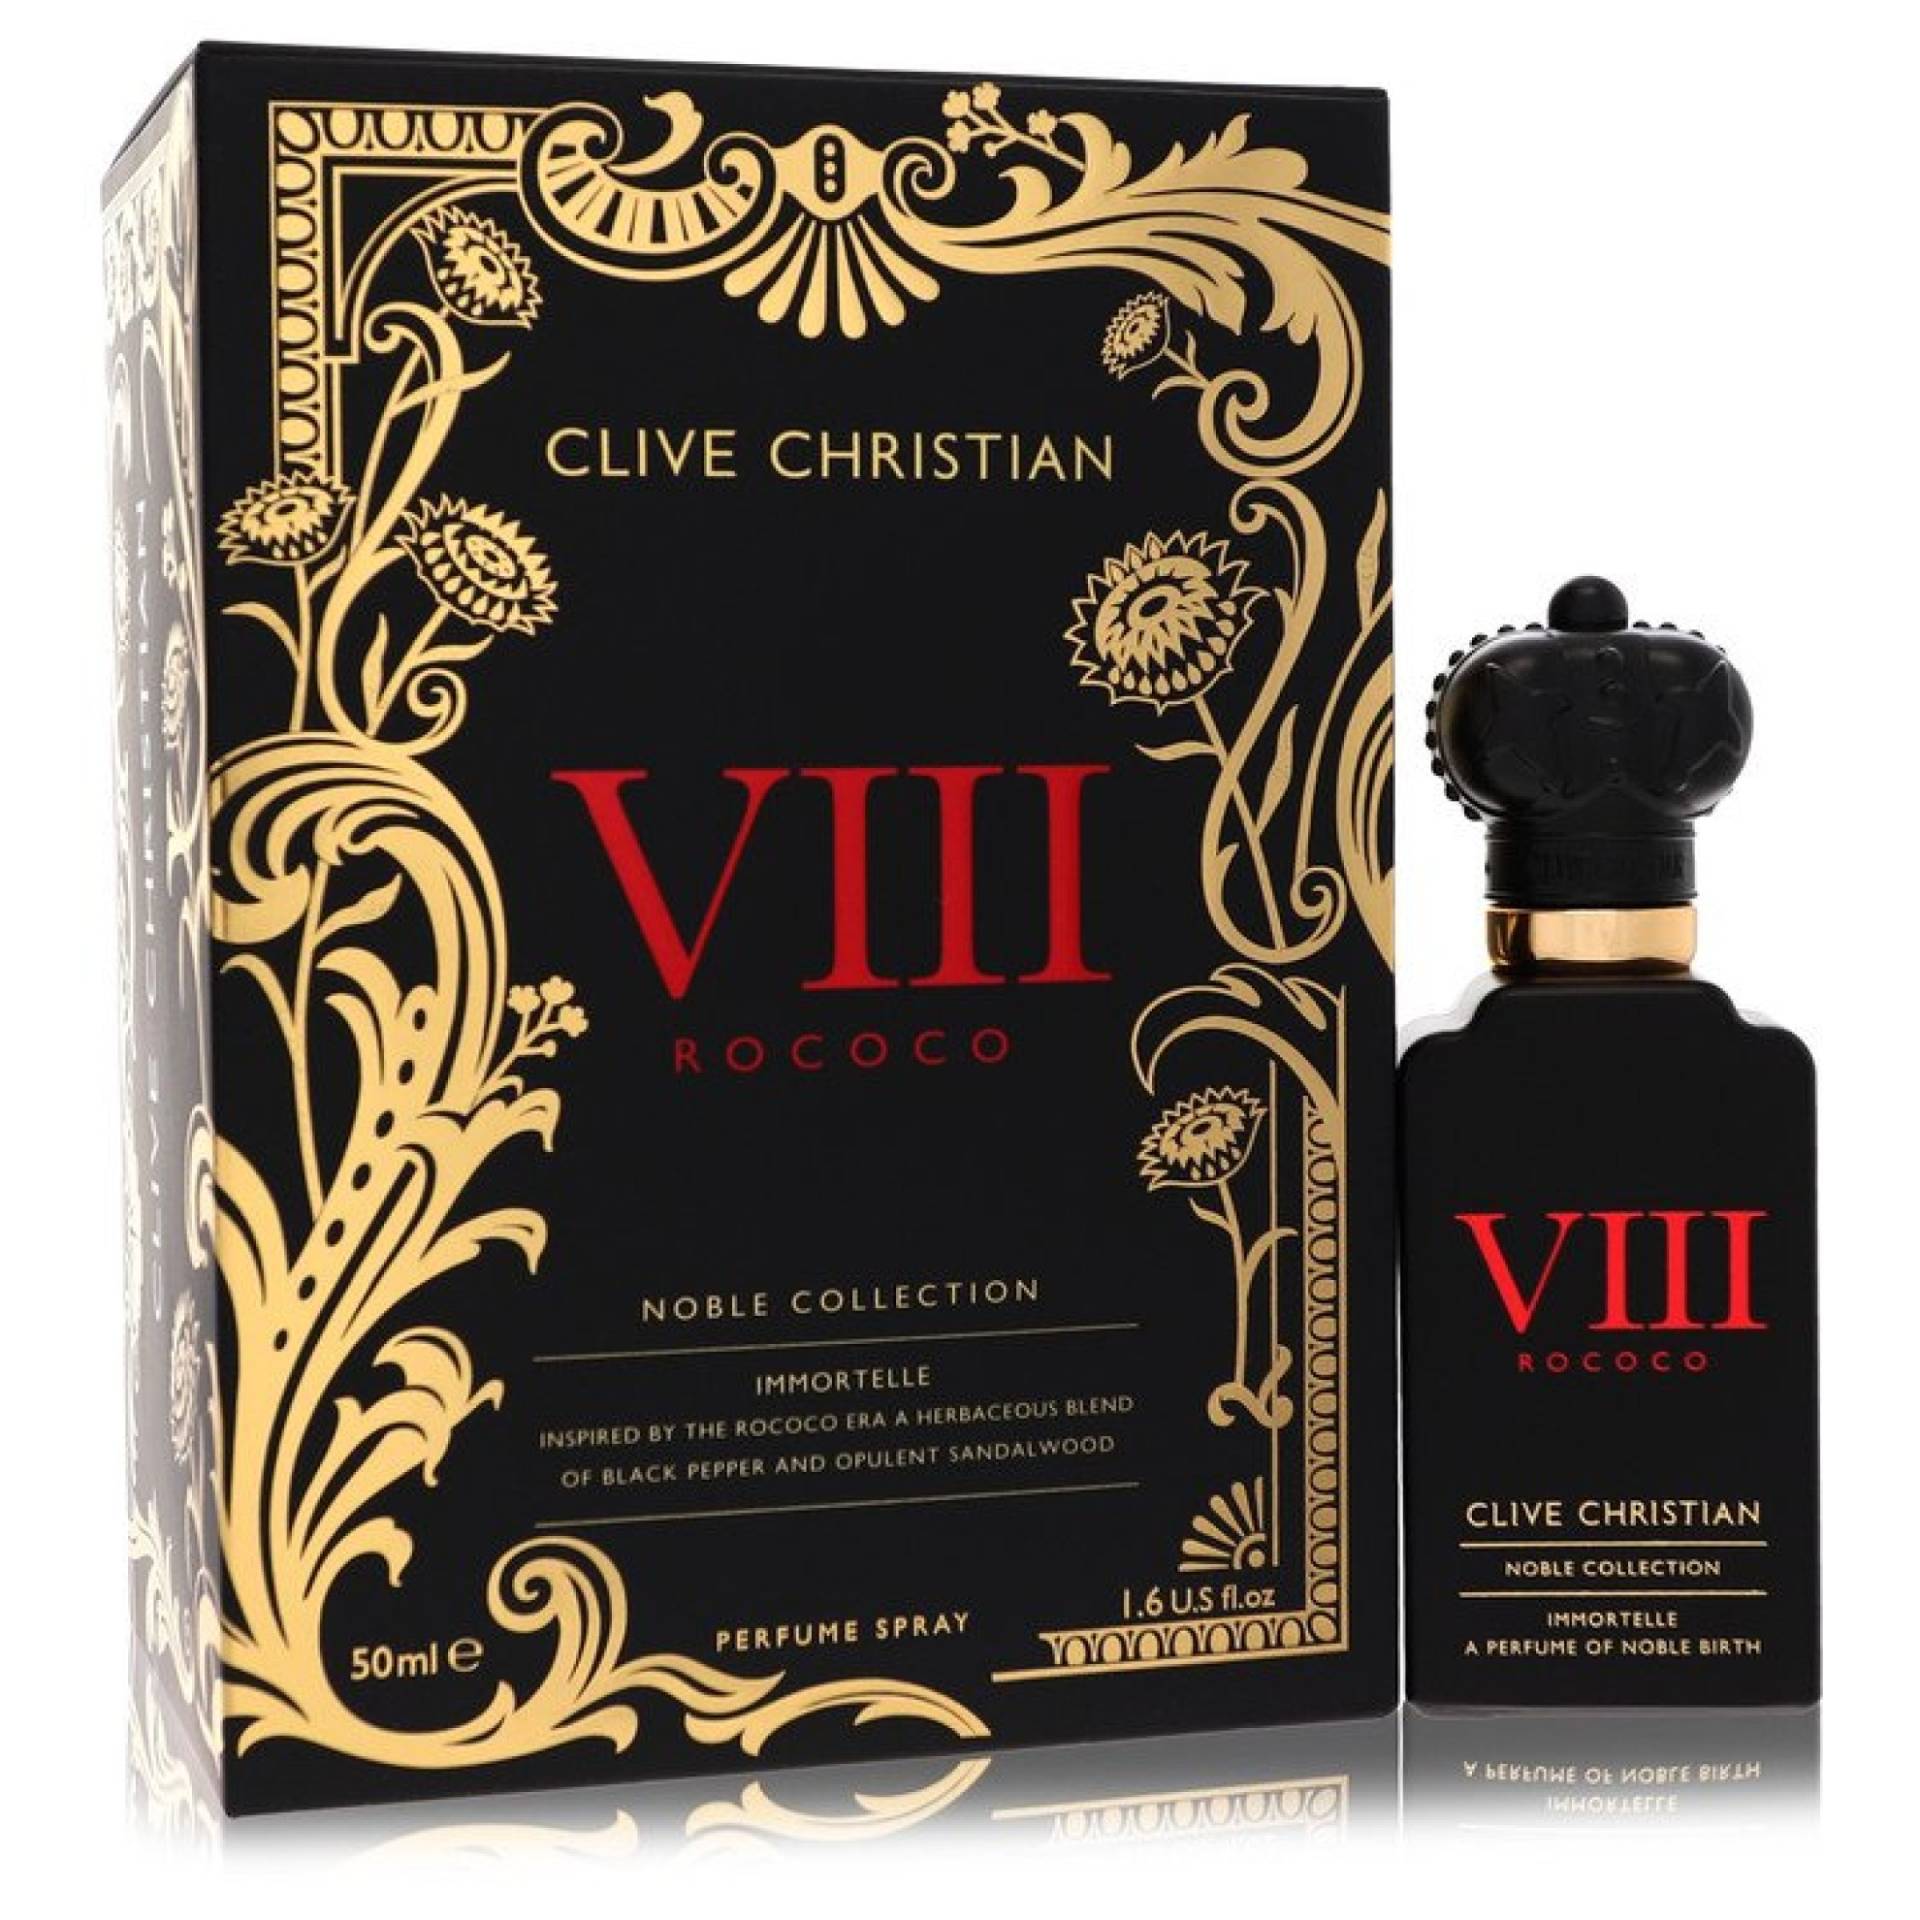 Clive Christian Viii Rococo Immortelle Eau De Parfum Spray 50 ml von Clive Christian